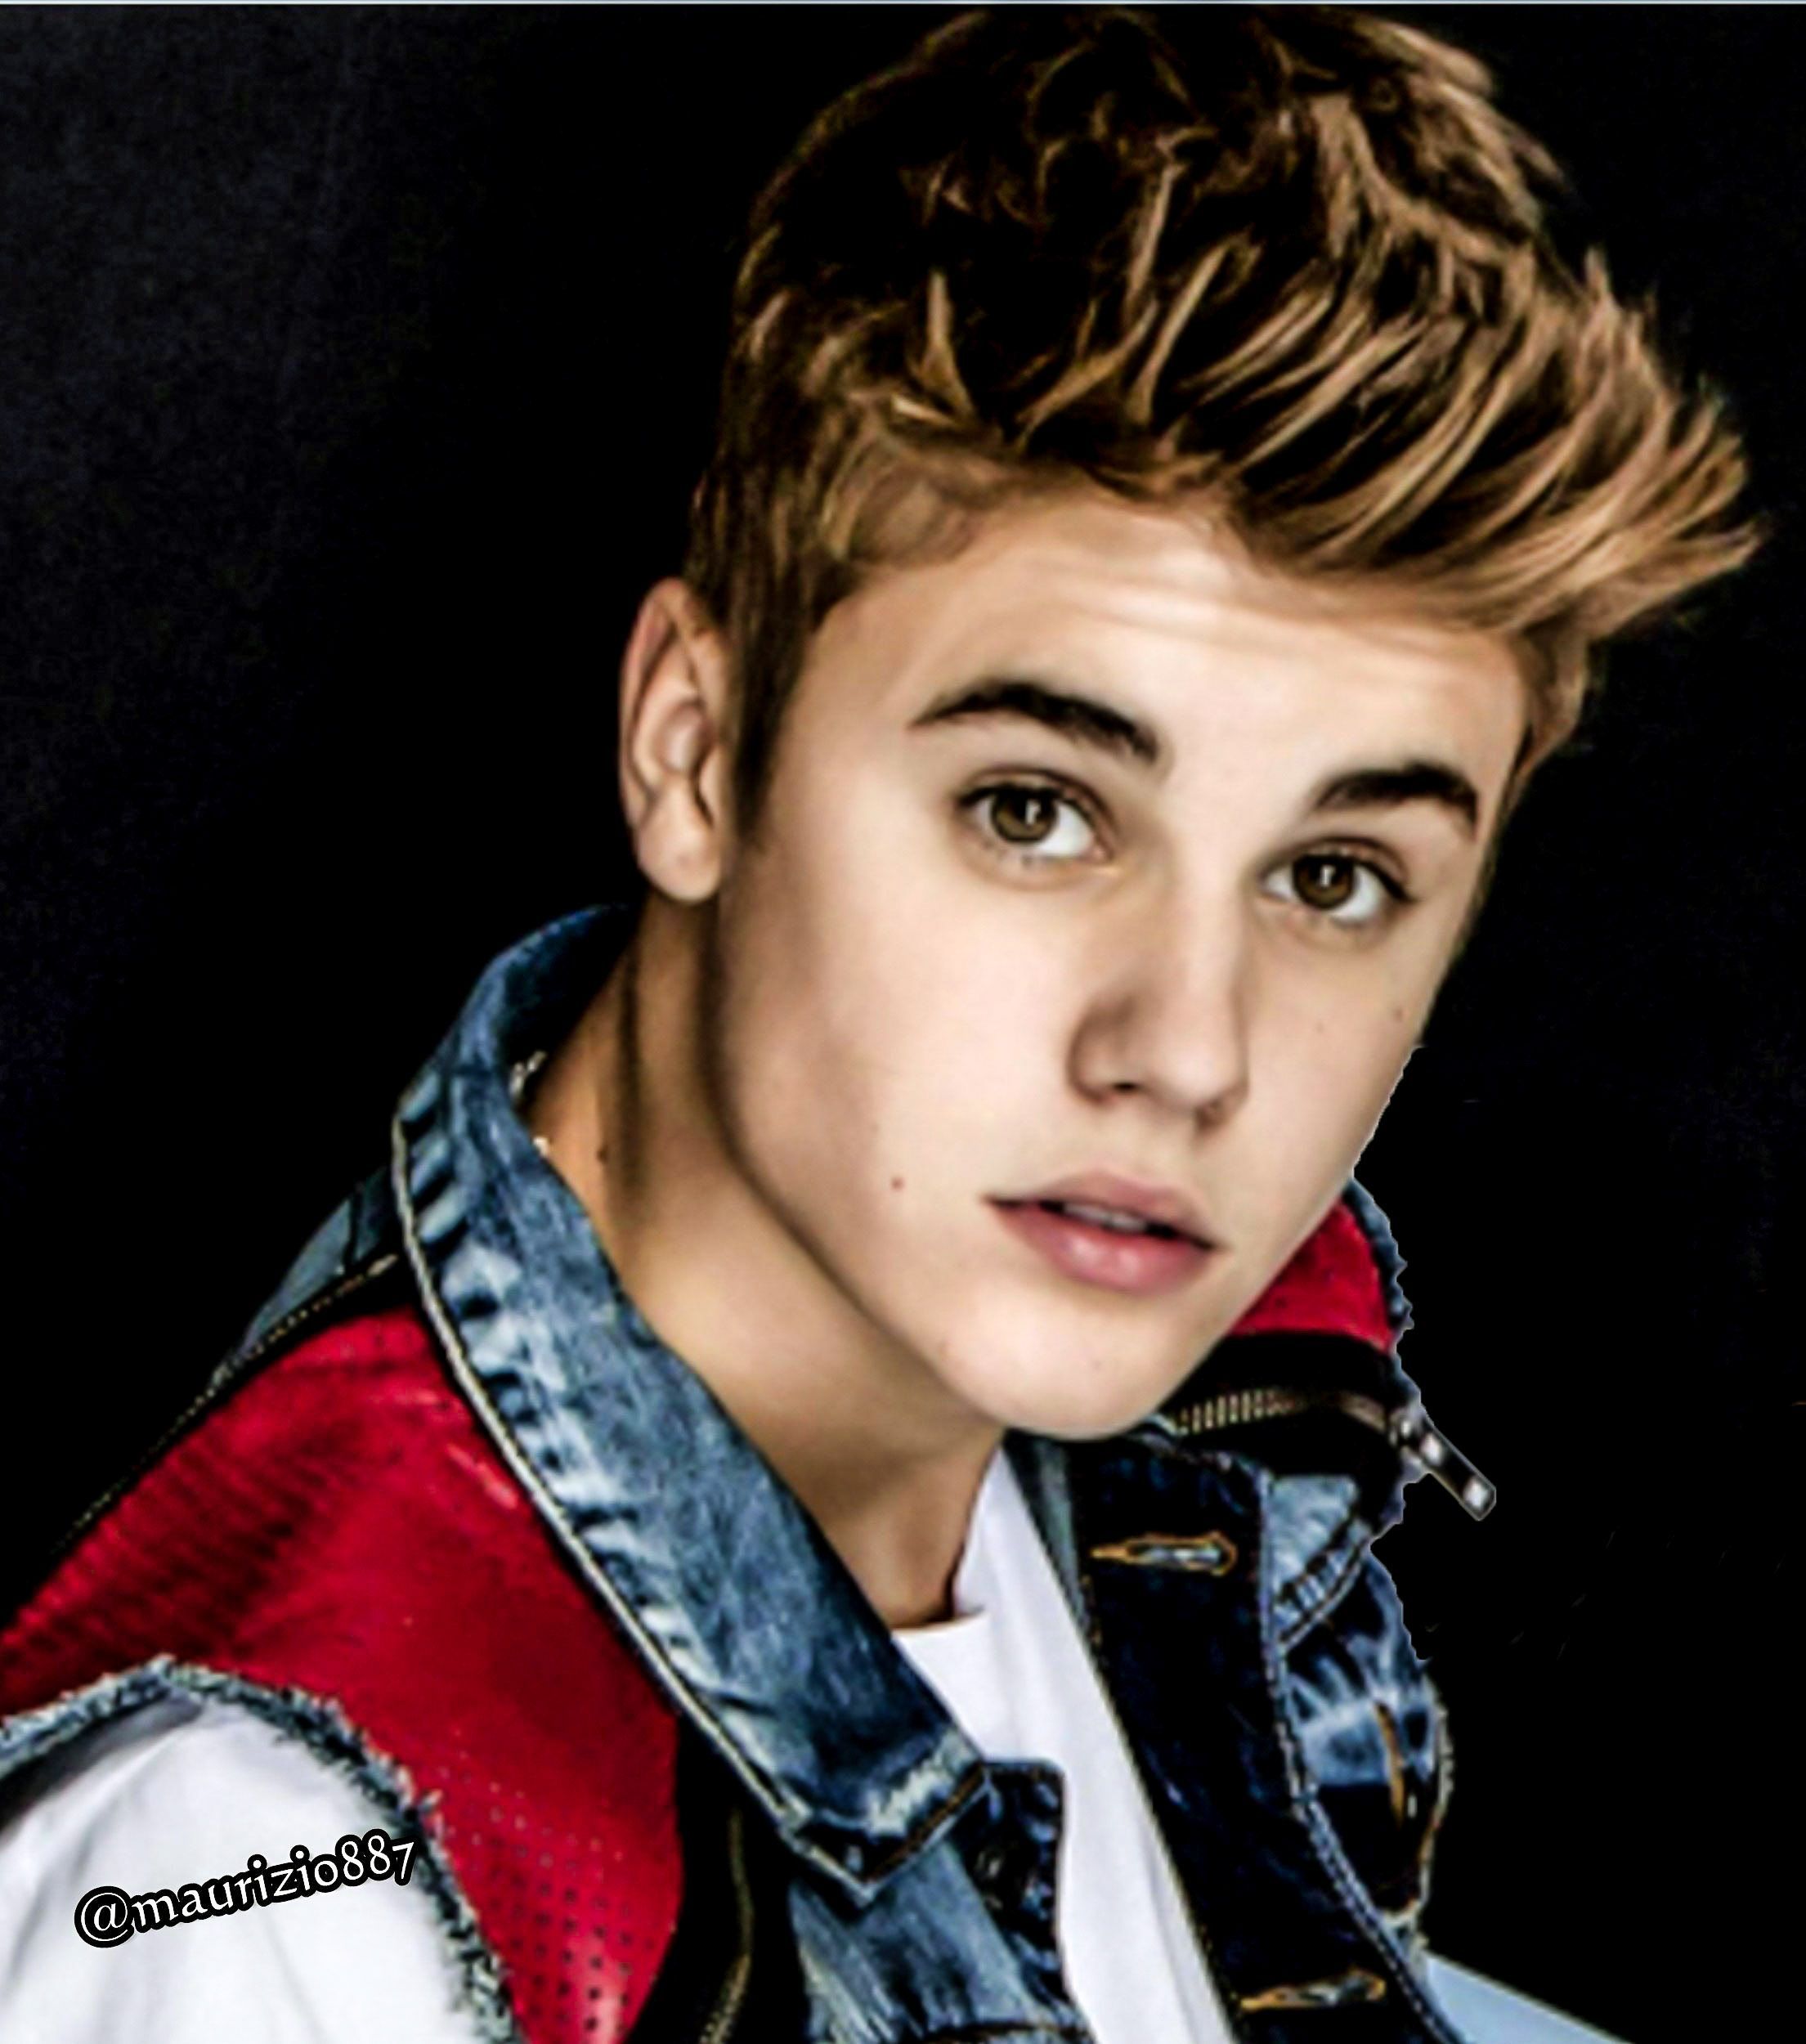 Justin Bieber Wallpaper HD 2015. Justin bieber 2015 photohoot, Justin bieber image, Justin bieber photohoot